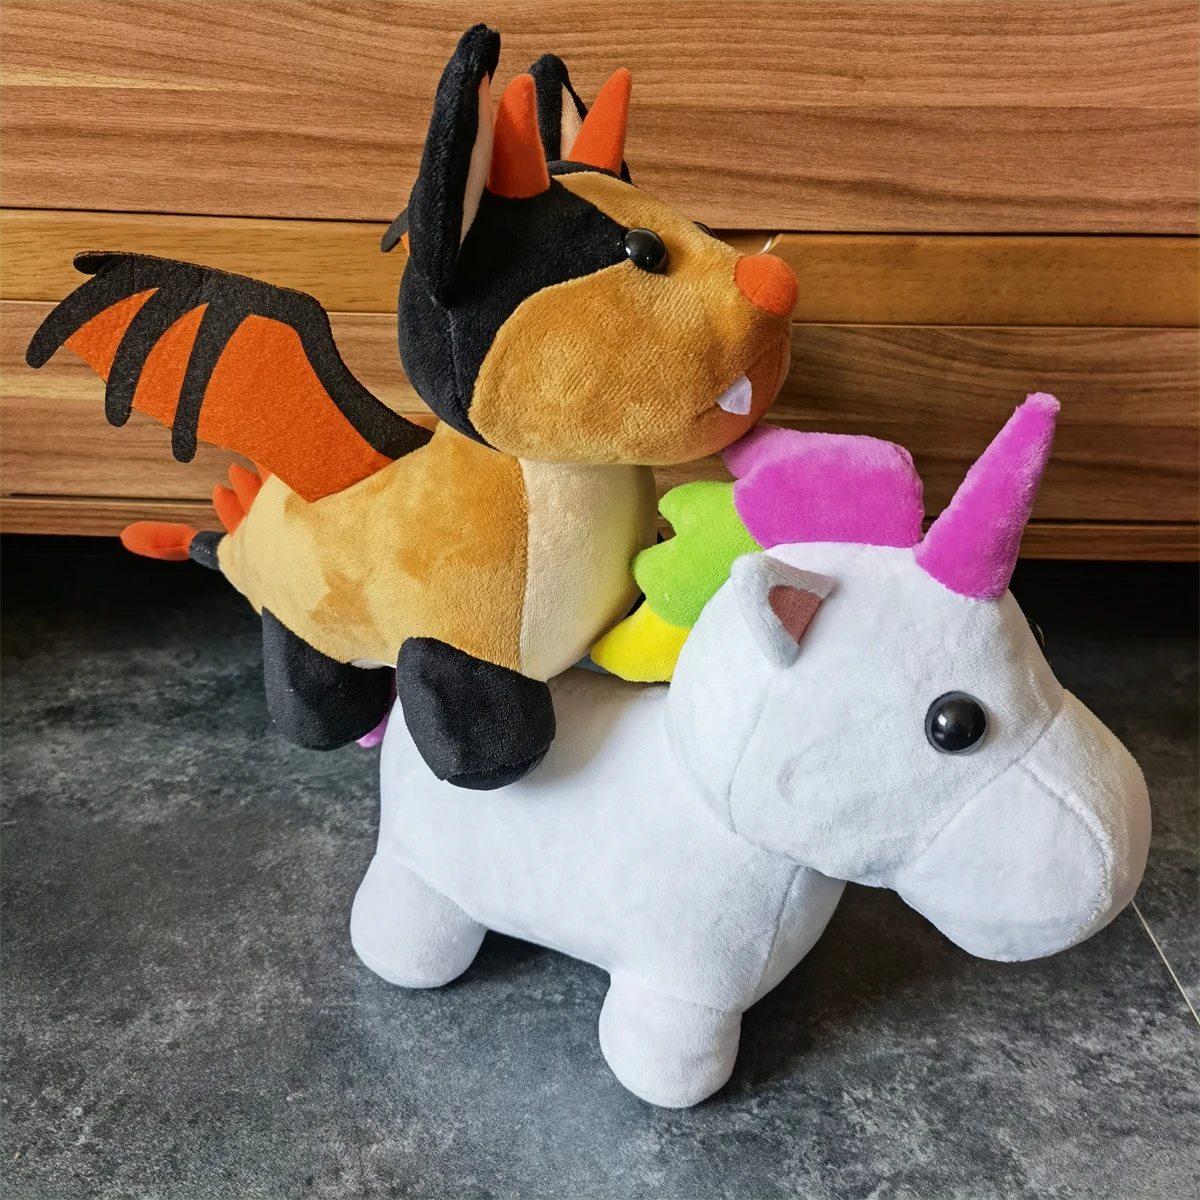 

2Pcs Adopt Me Pets Unicorn & Bat Dragon Plush Toys Animal Peluche Action Figures Cute Stuffed Juguetes Dolls